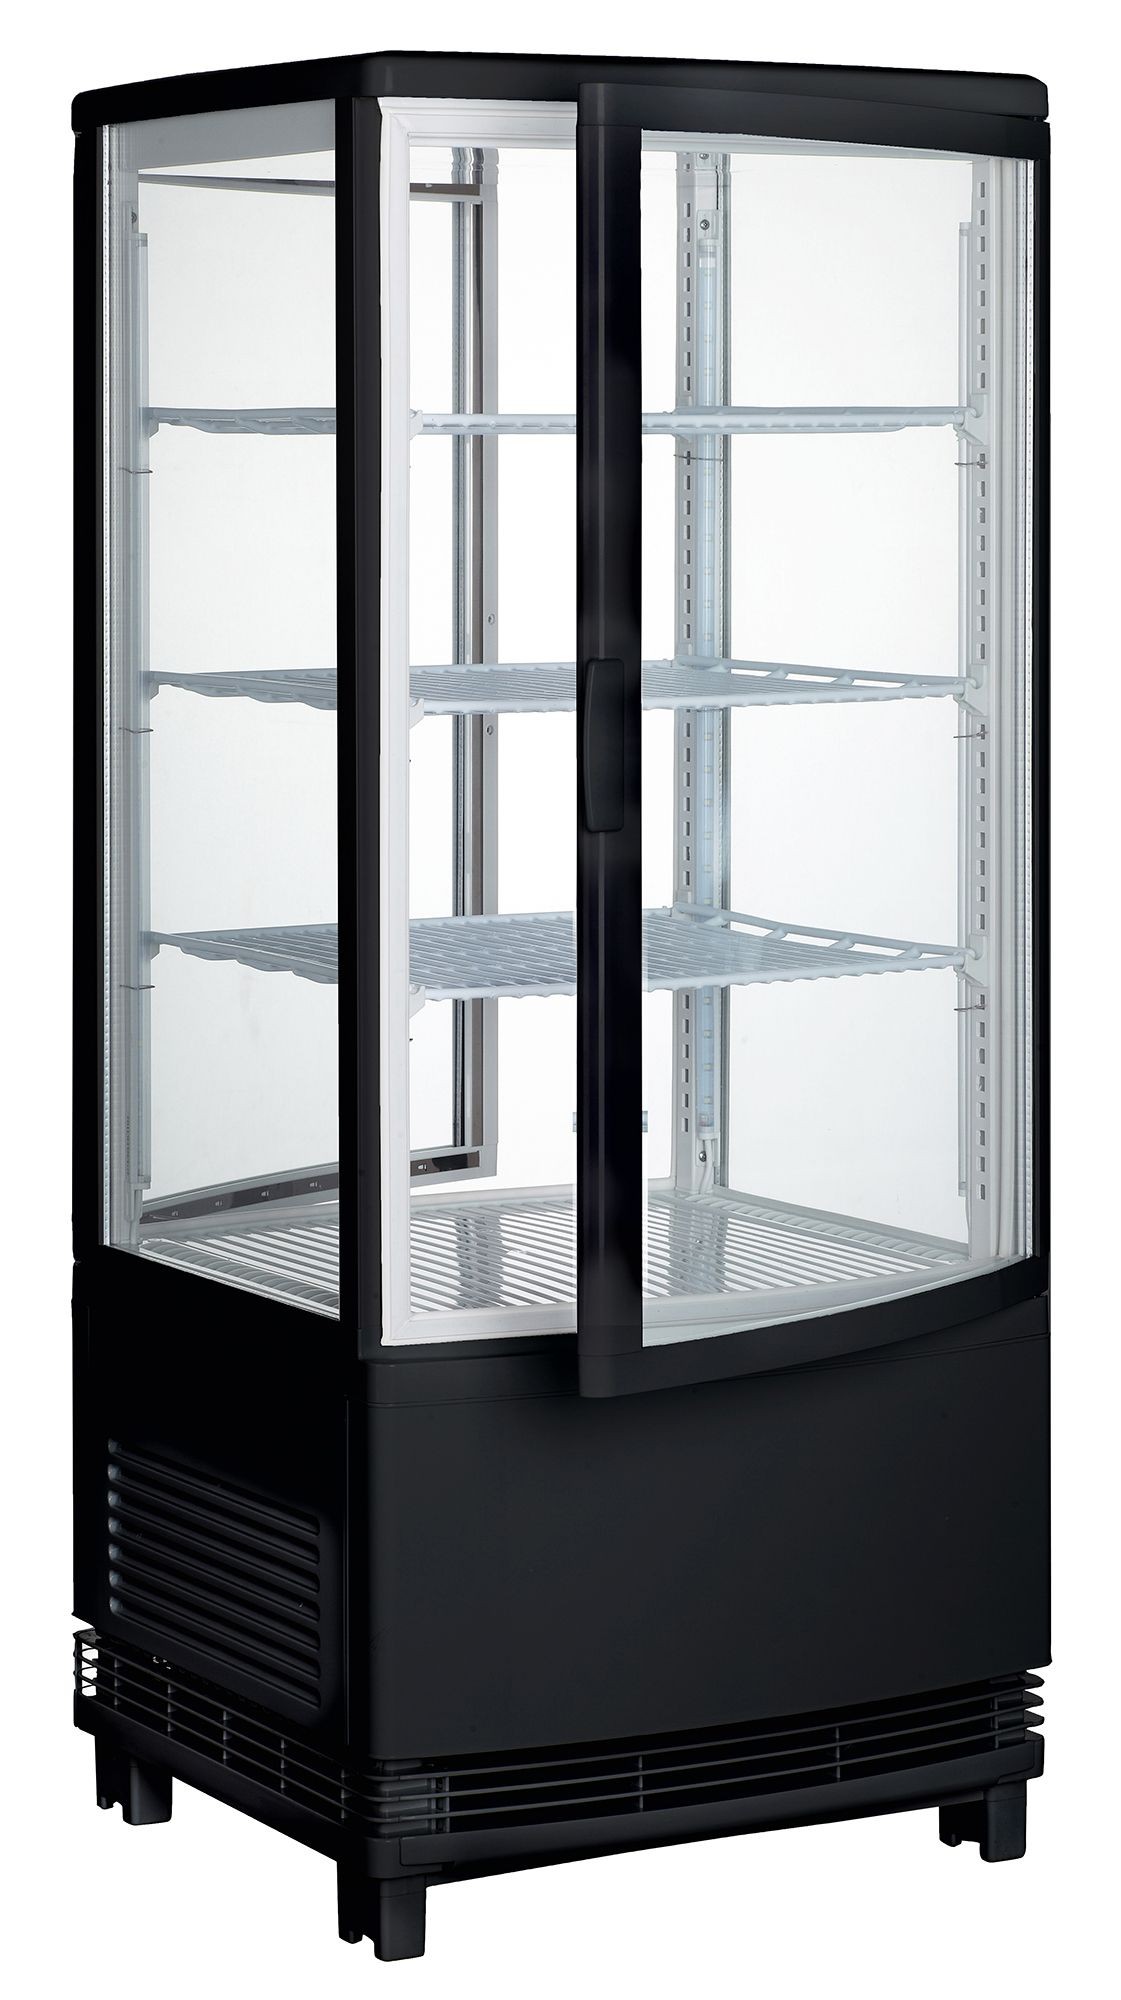 Winco CRD-1K Countertop Refrigerated Beverage Display, Black